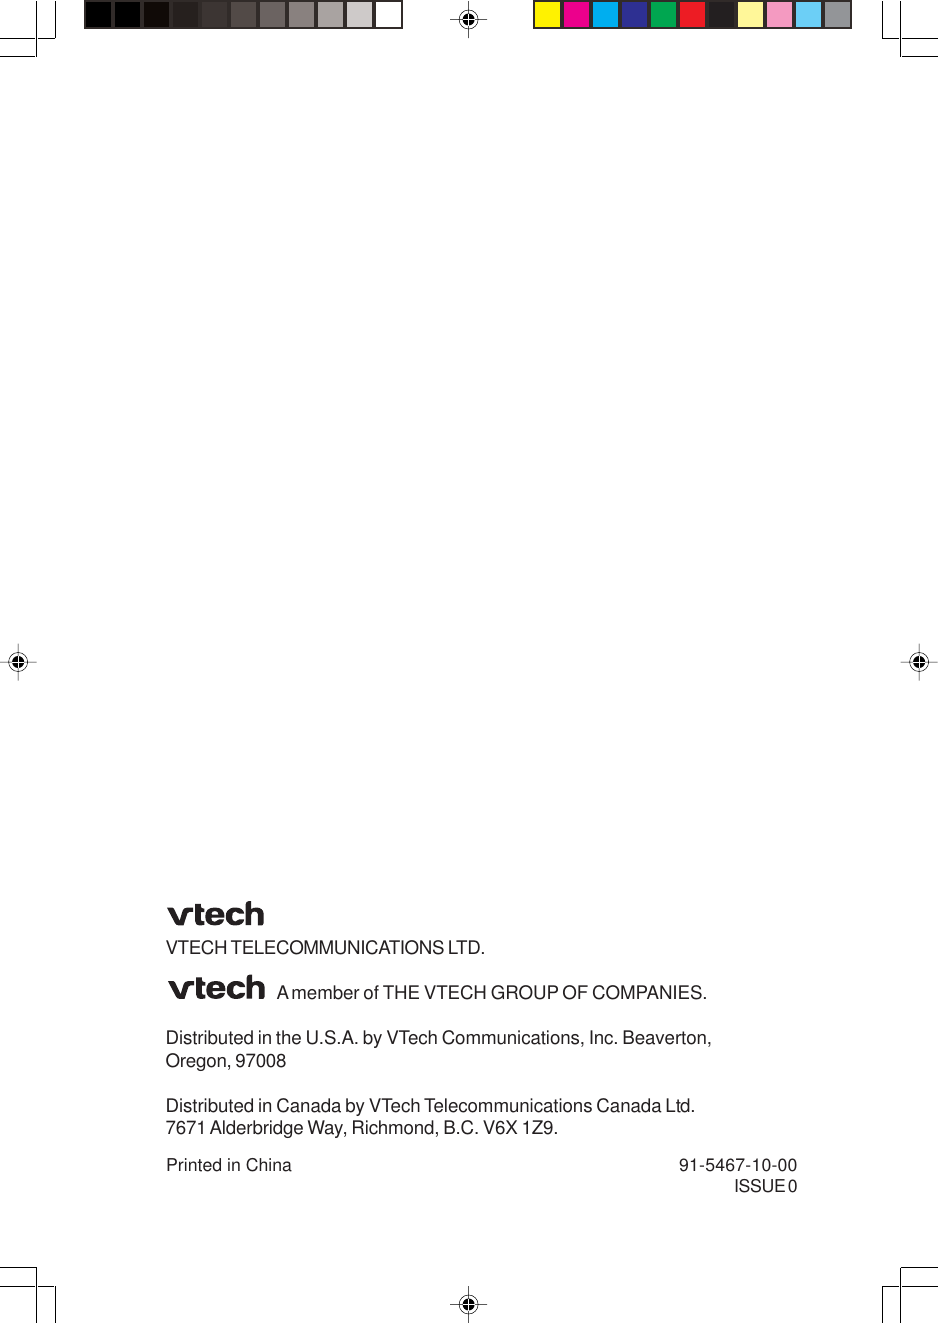 VTECH TELECOMMUNICATIONS LTD.A member of THE VTECH GROUP OF COMPANIES.Distributed in the U.S.A. by VTech Communications, Inc. Beaverton,Oregon, 97008Distributed in Canada by VTech Telecommunications Canada Ltd.7671 Alderbridge Way, Richmond, B.C. V6X 1Z9.Printed in China 91-5467-10-00ISSUE 0